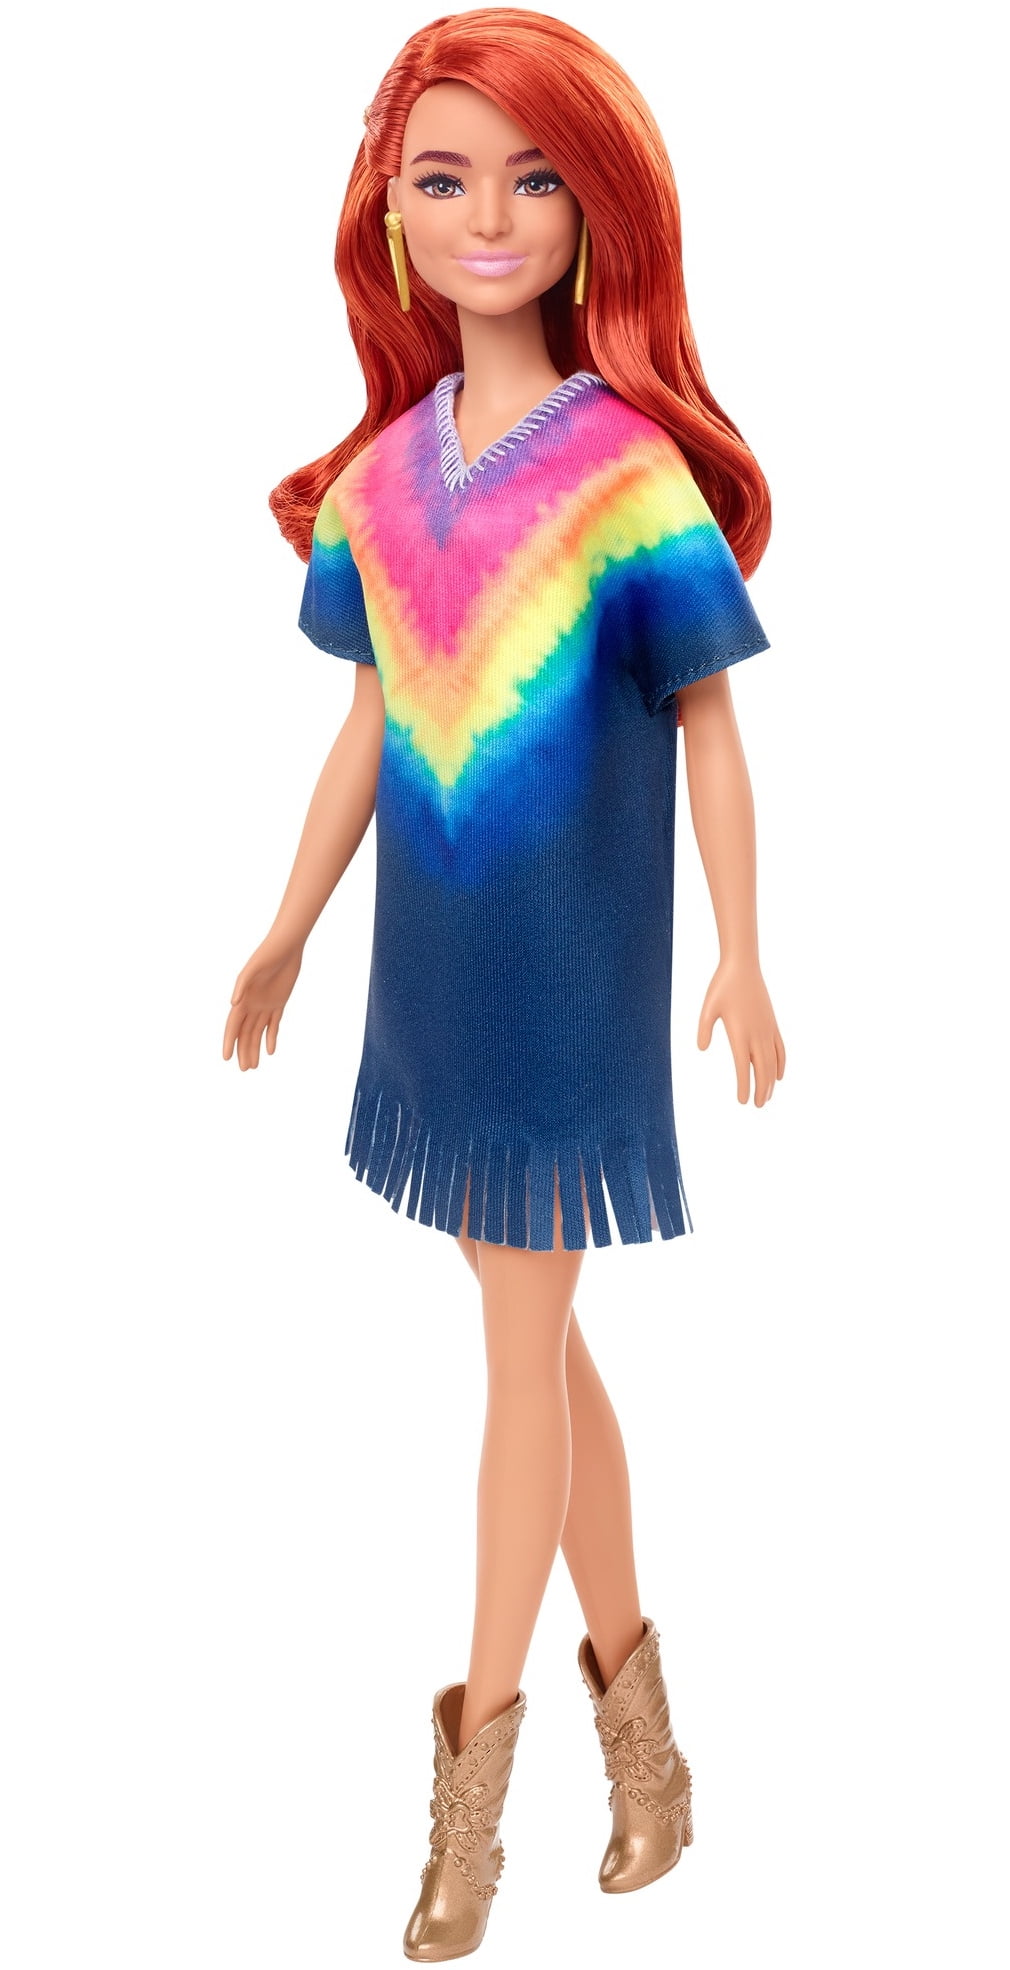 Fashionistas #141 Red Hair Tie Dye Fringe Dress Barbie Doll Mattel Ghw55 NRFB for sale online 